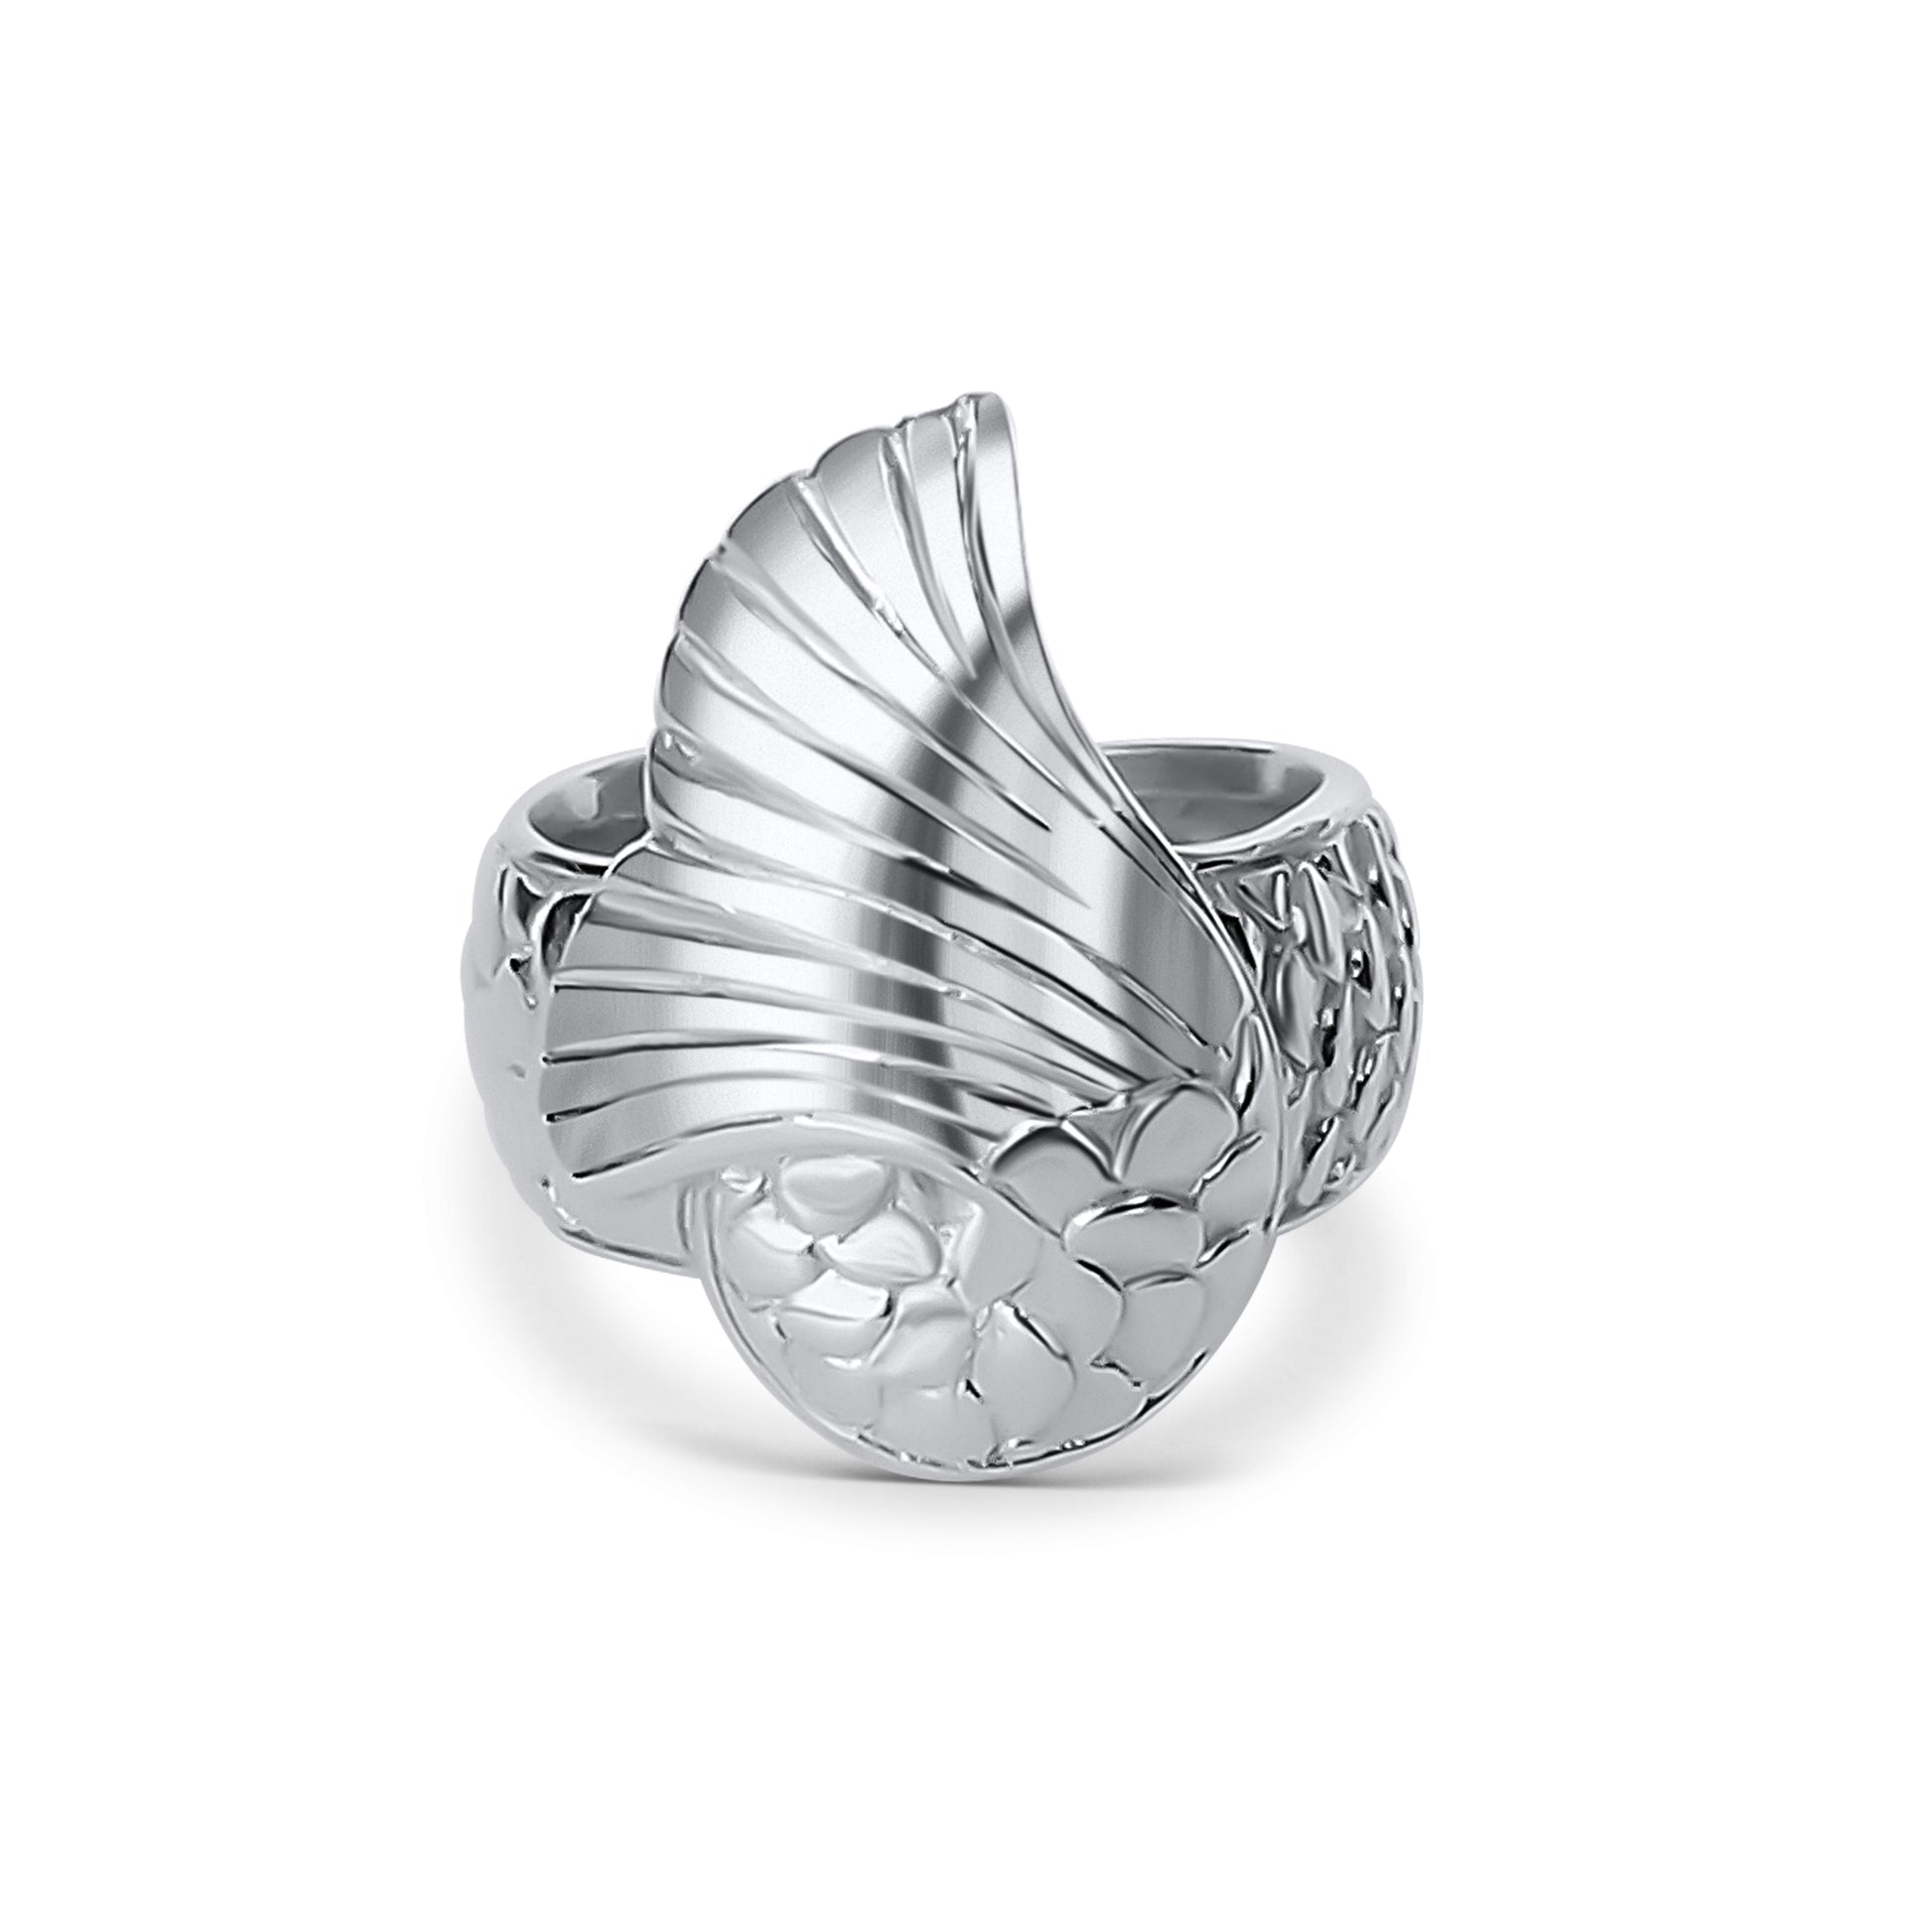 silver ariel mermaid tail ring CAD file photo franki & felix jewellery